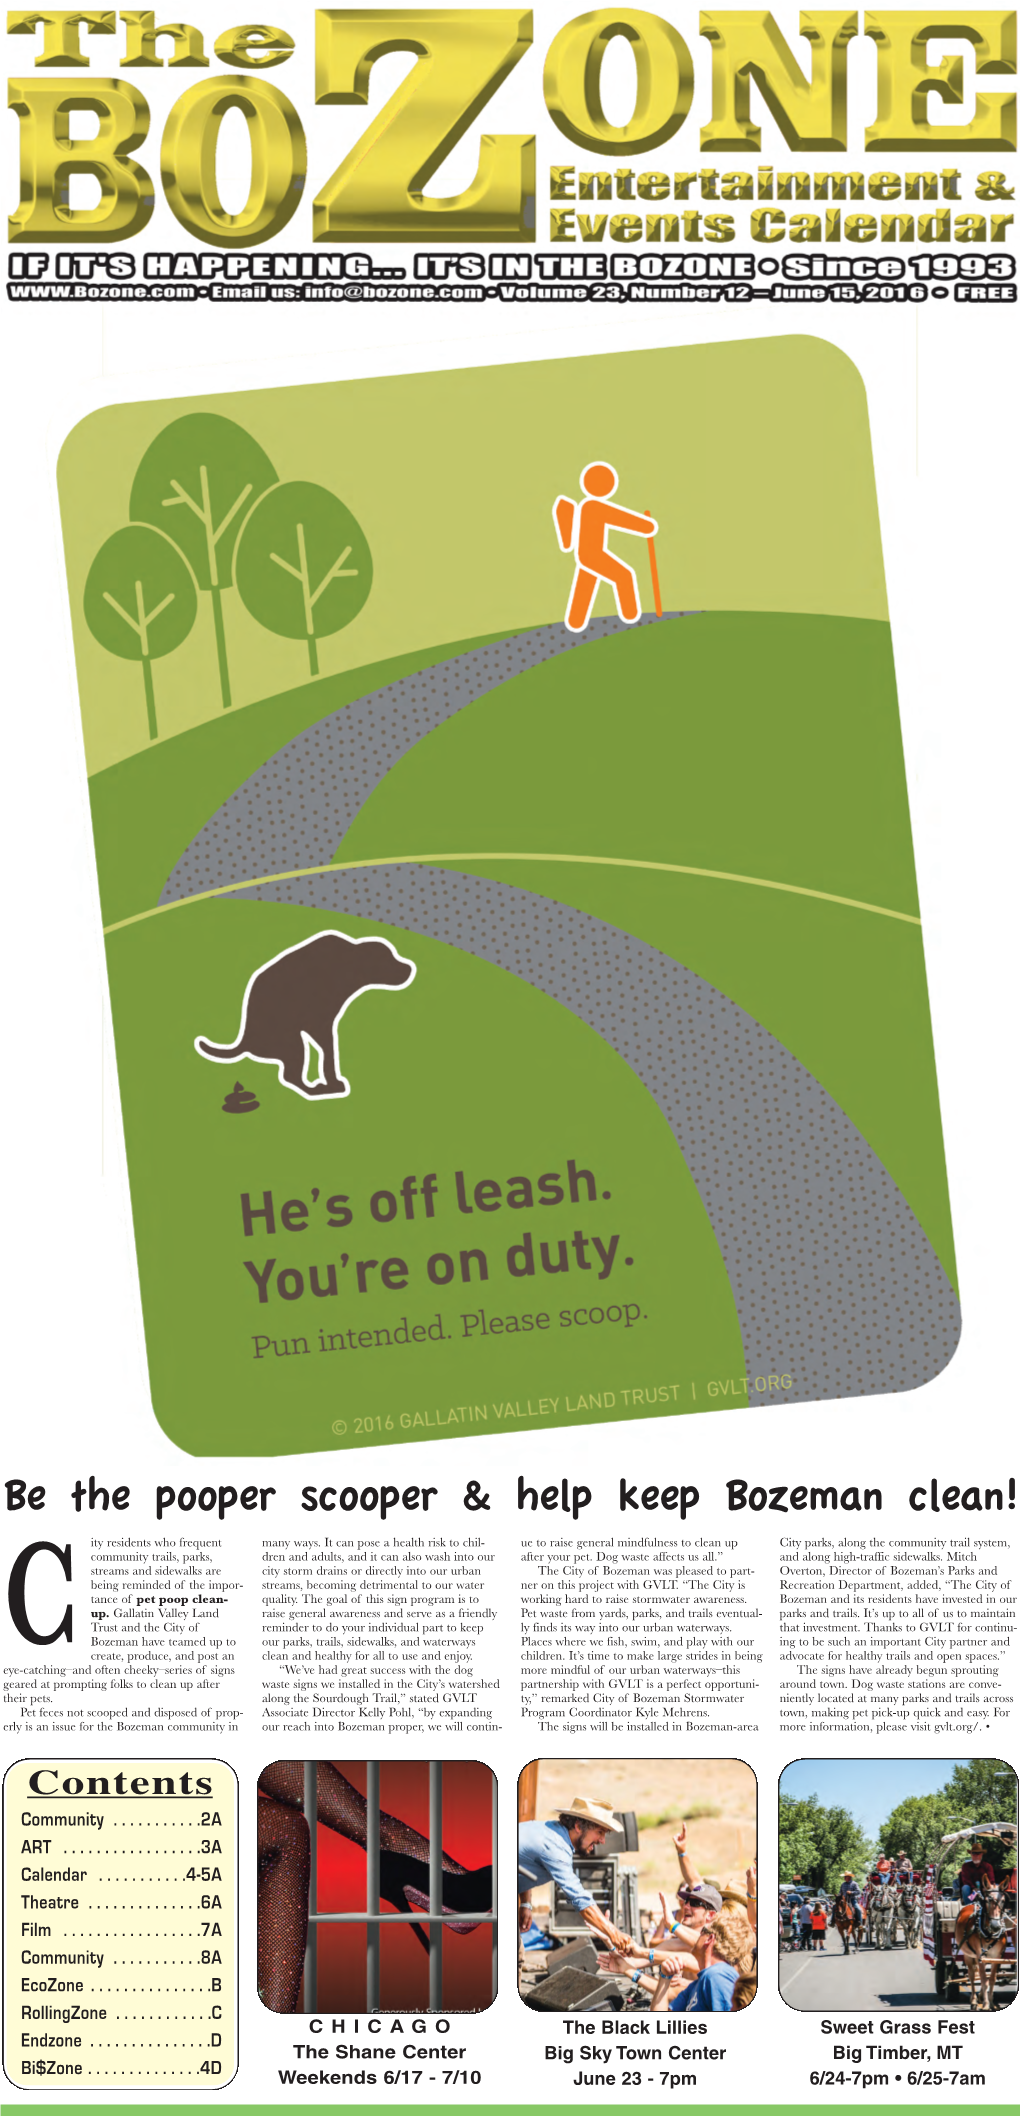 Cbe the Pooper Scooper & Help Keep Bozeman Clean!